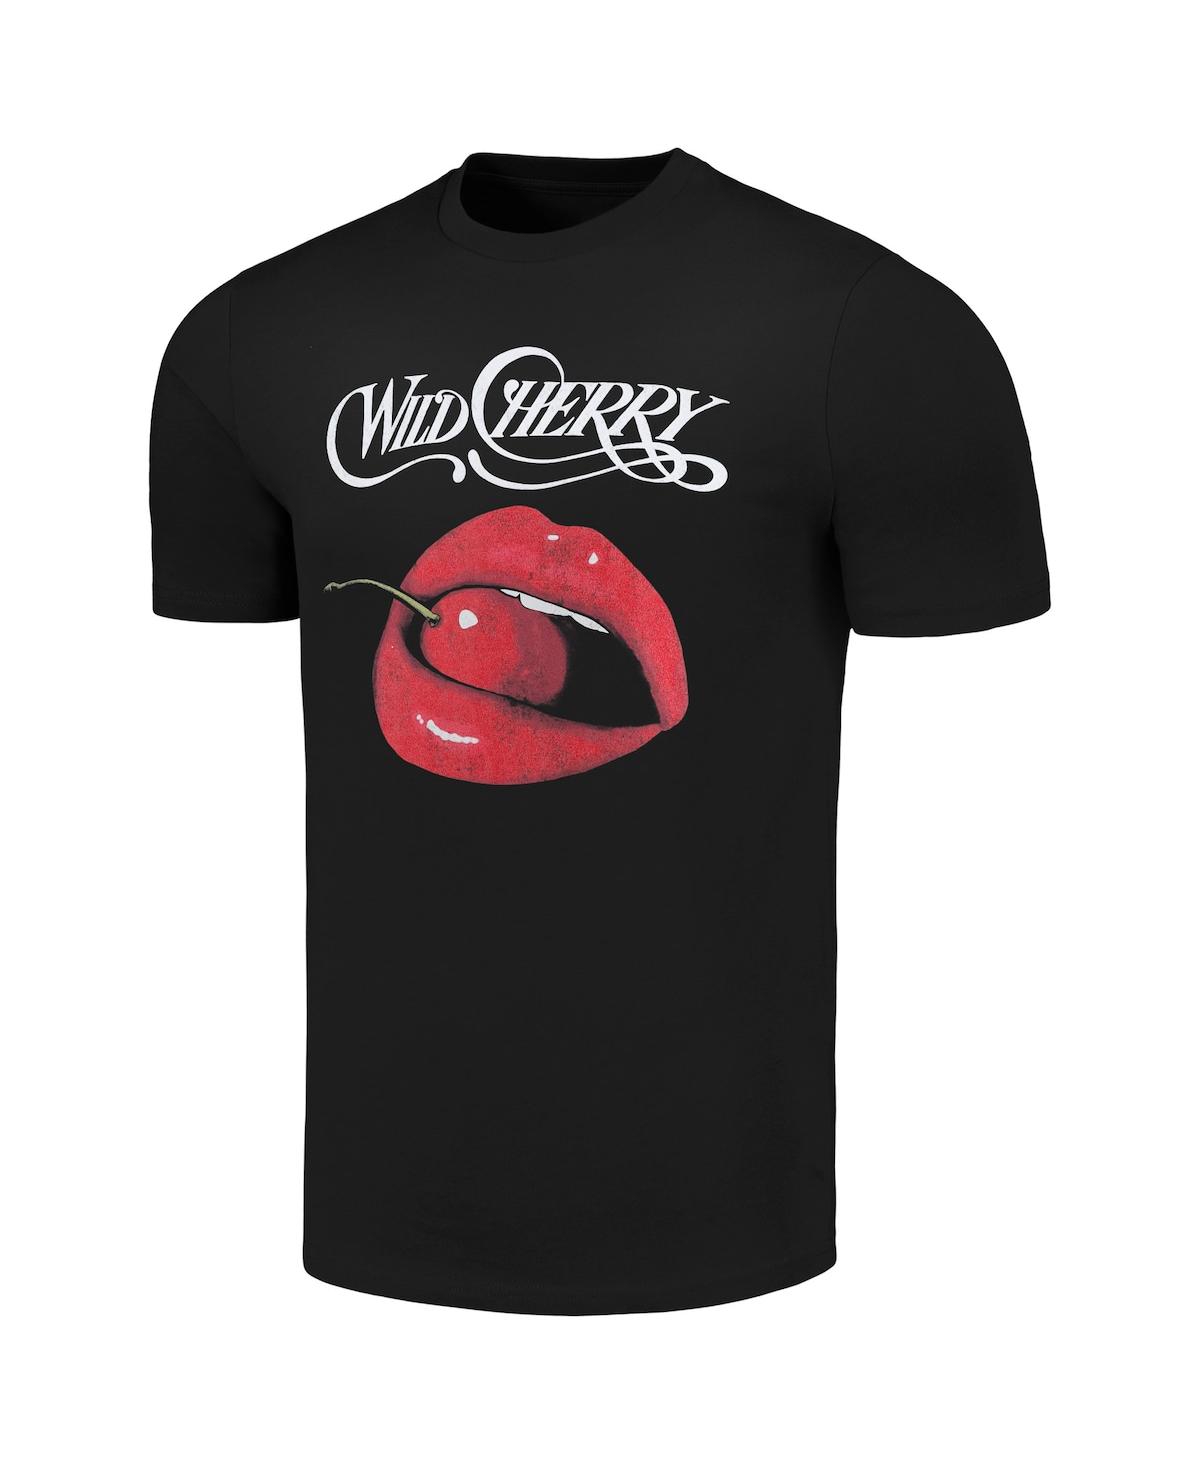 Shop American Classics Men's Black Wild Cherry Bite T-shirt